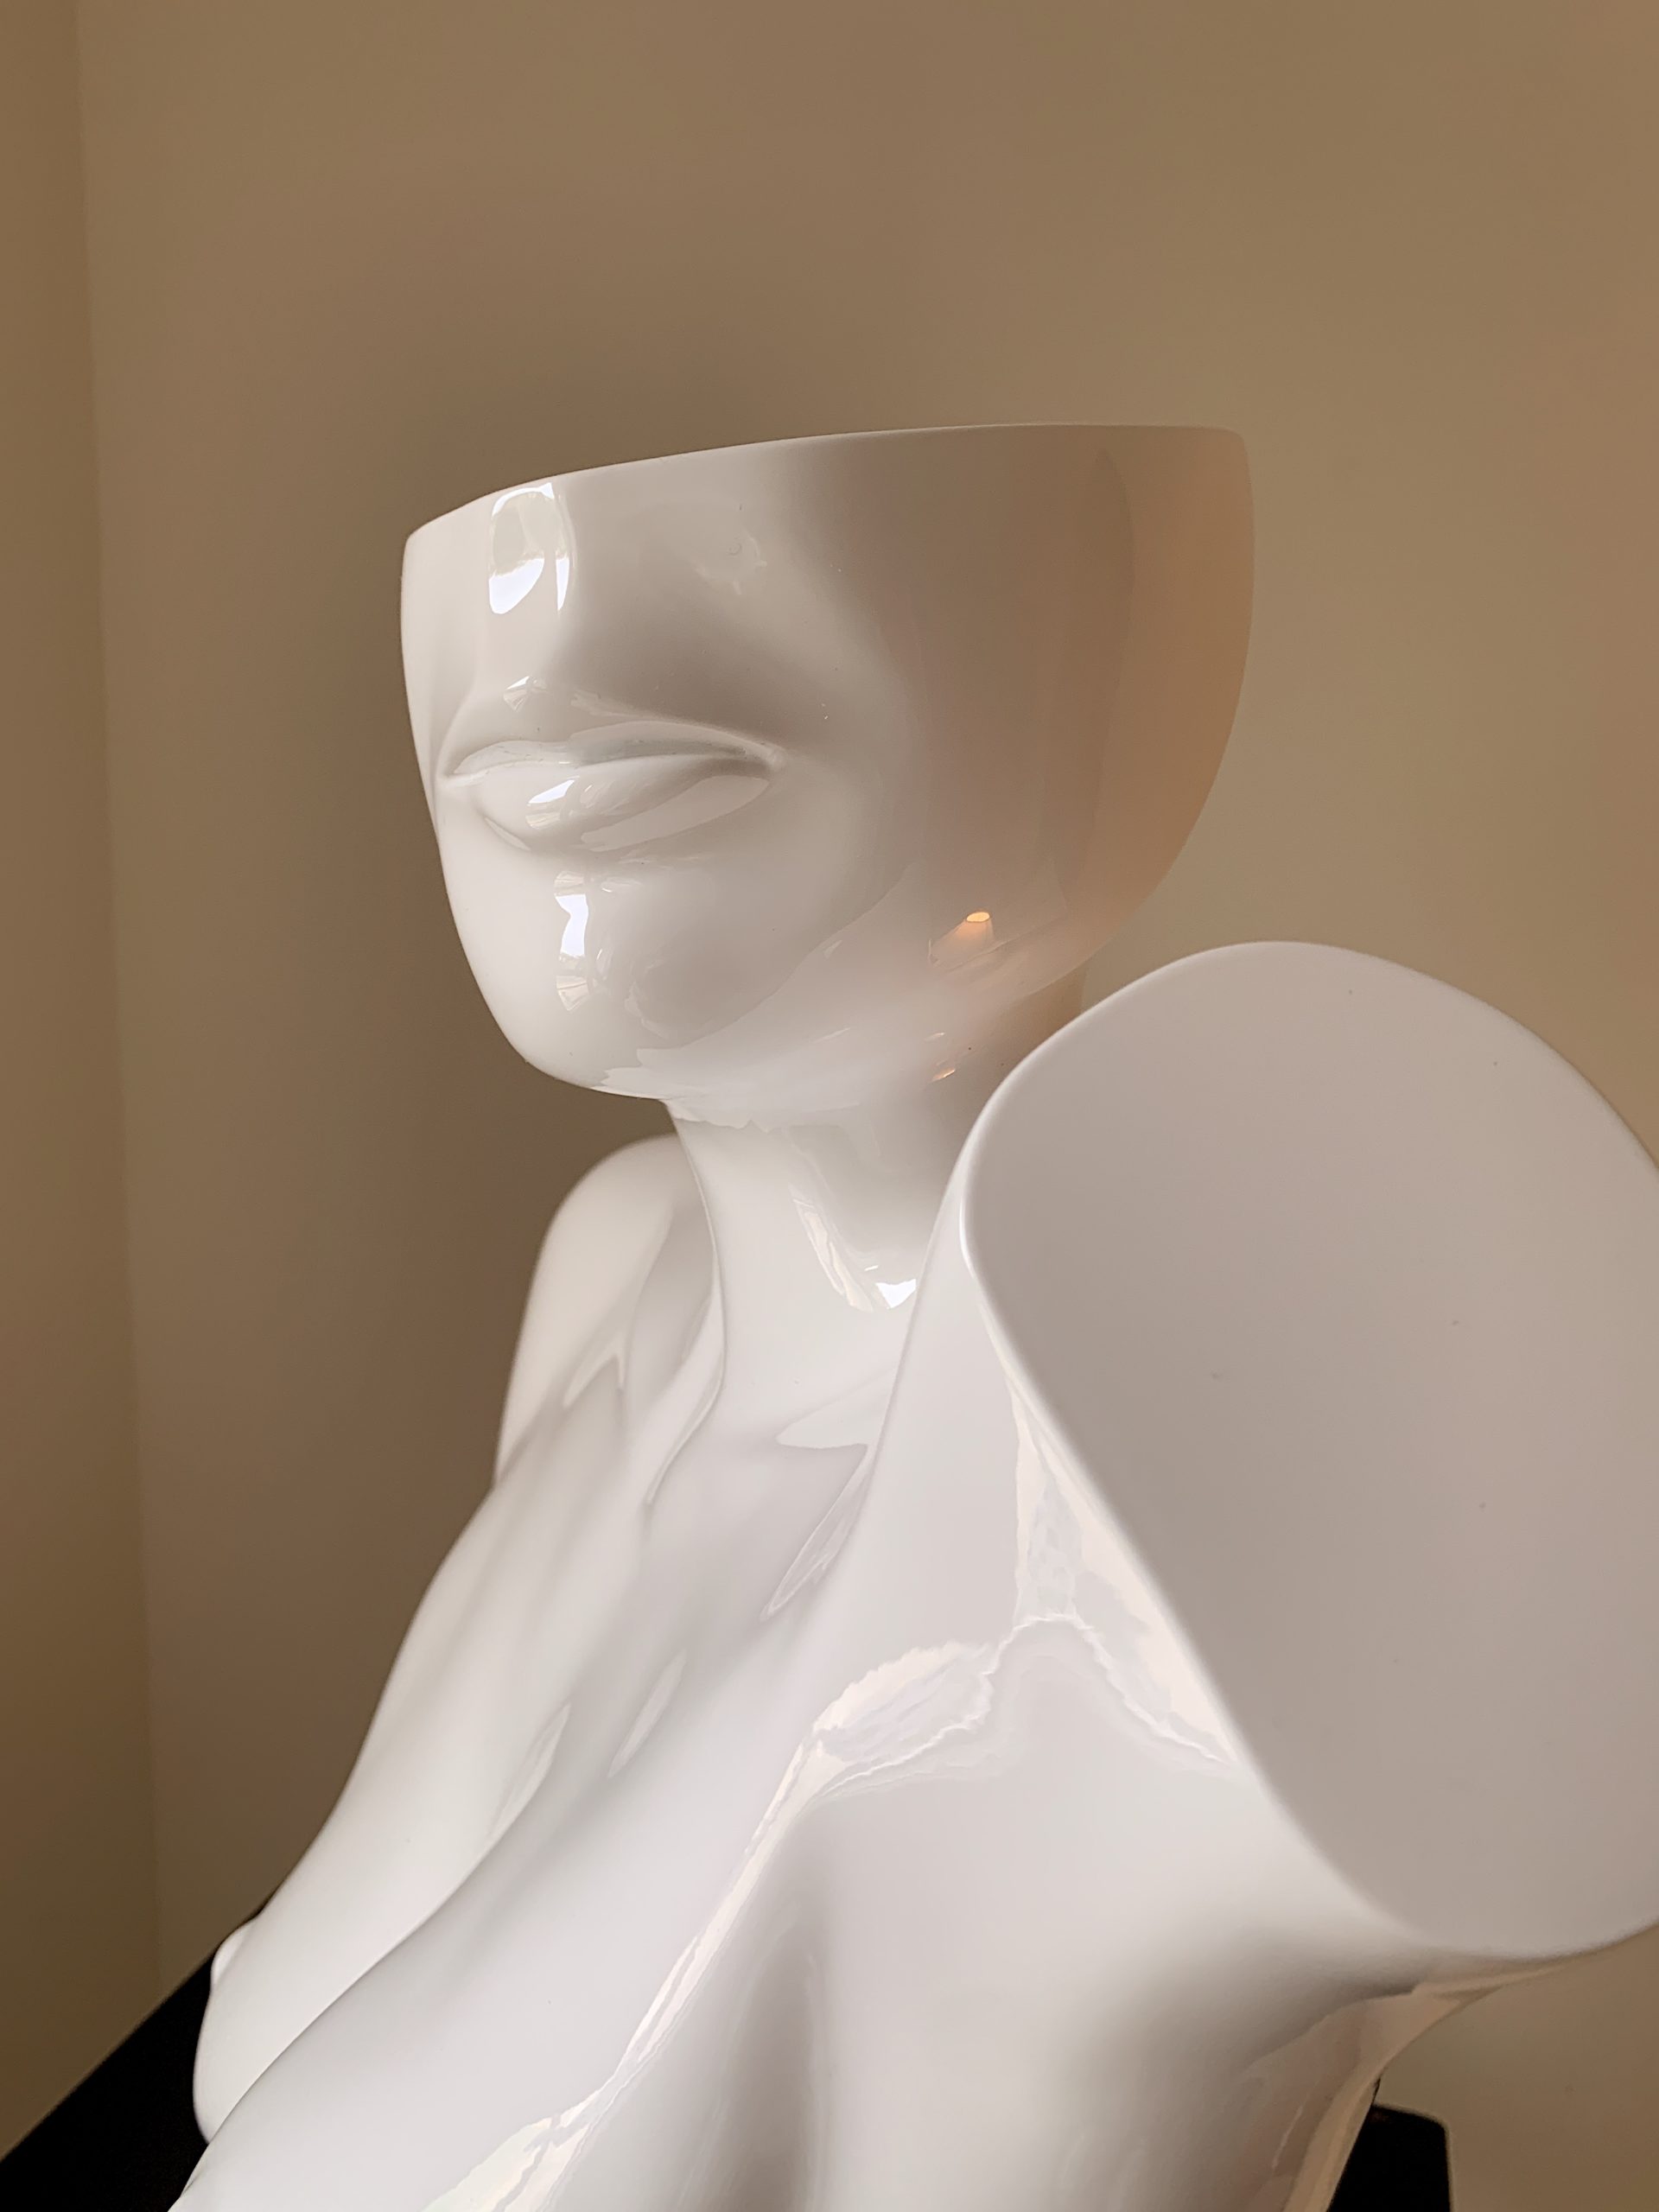 Blanc-sculpture-femme-art-artiste-féminn-peau-nu